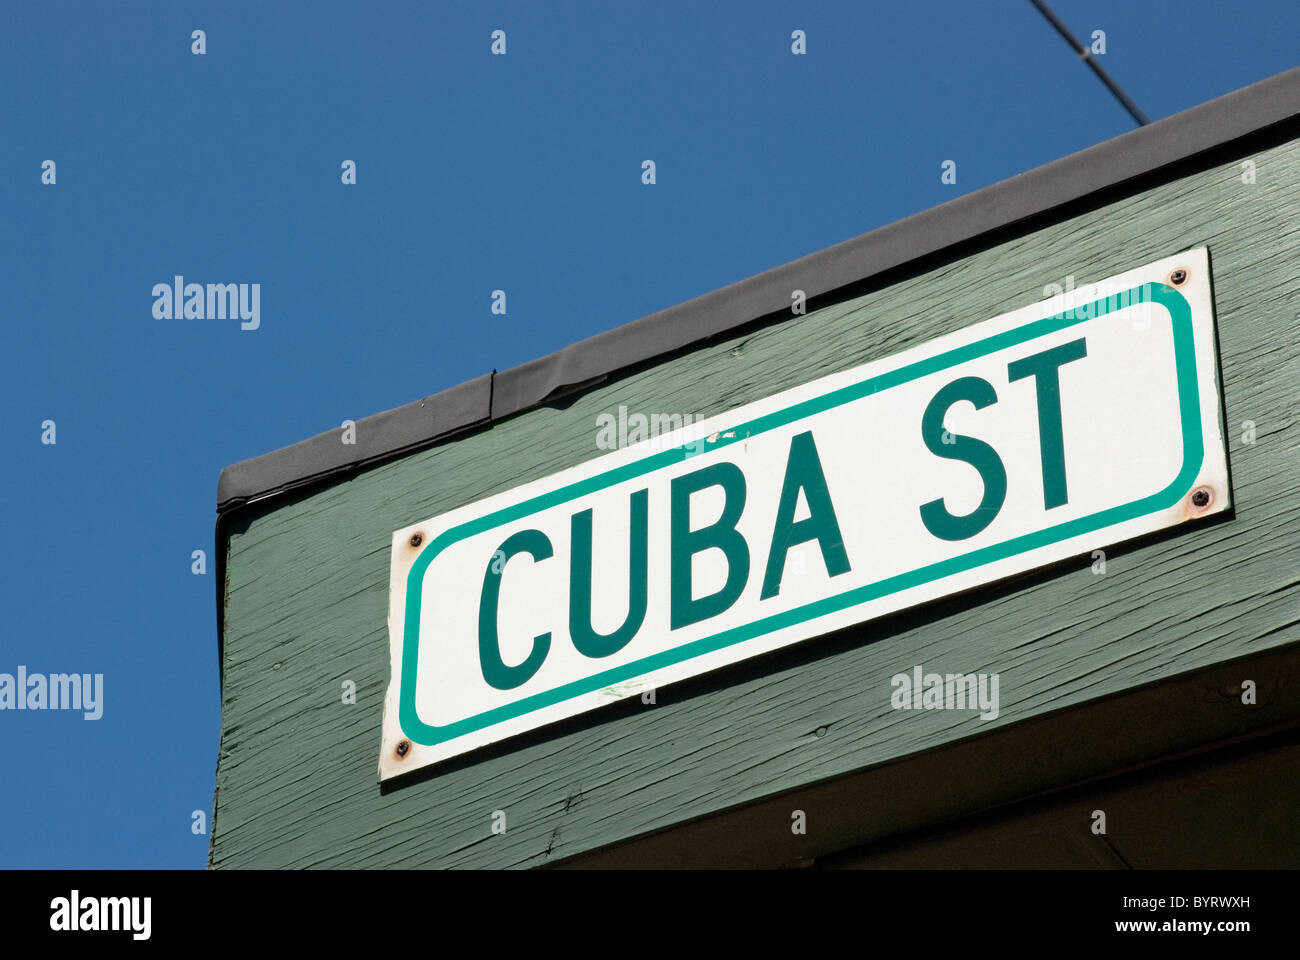 Cuba Steet, street sign: for the cosmopolitan cafe culture heart if Wellington, New Zealand. Stock Photo